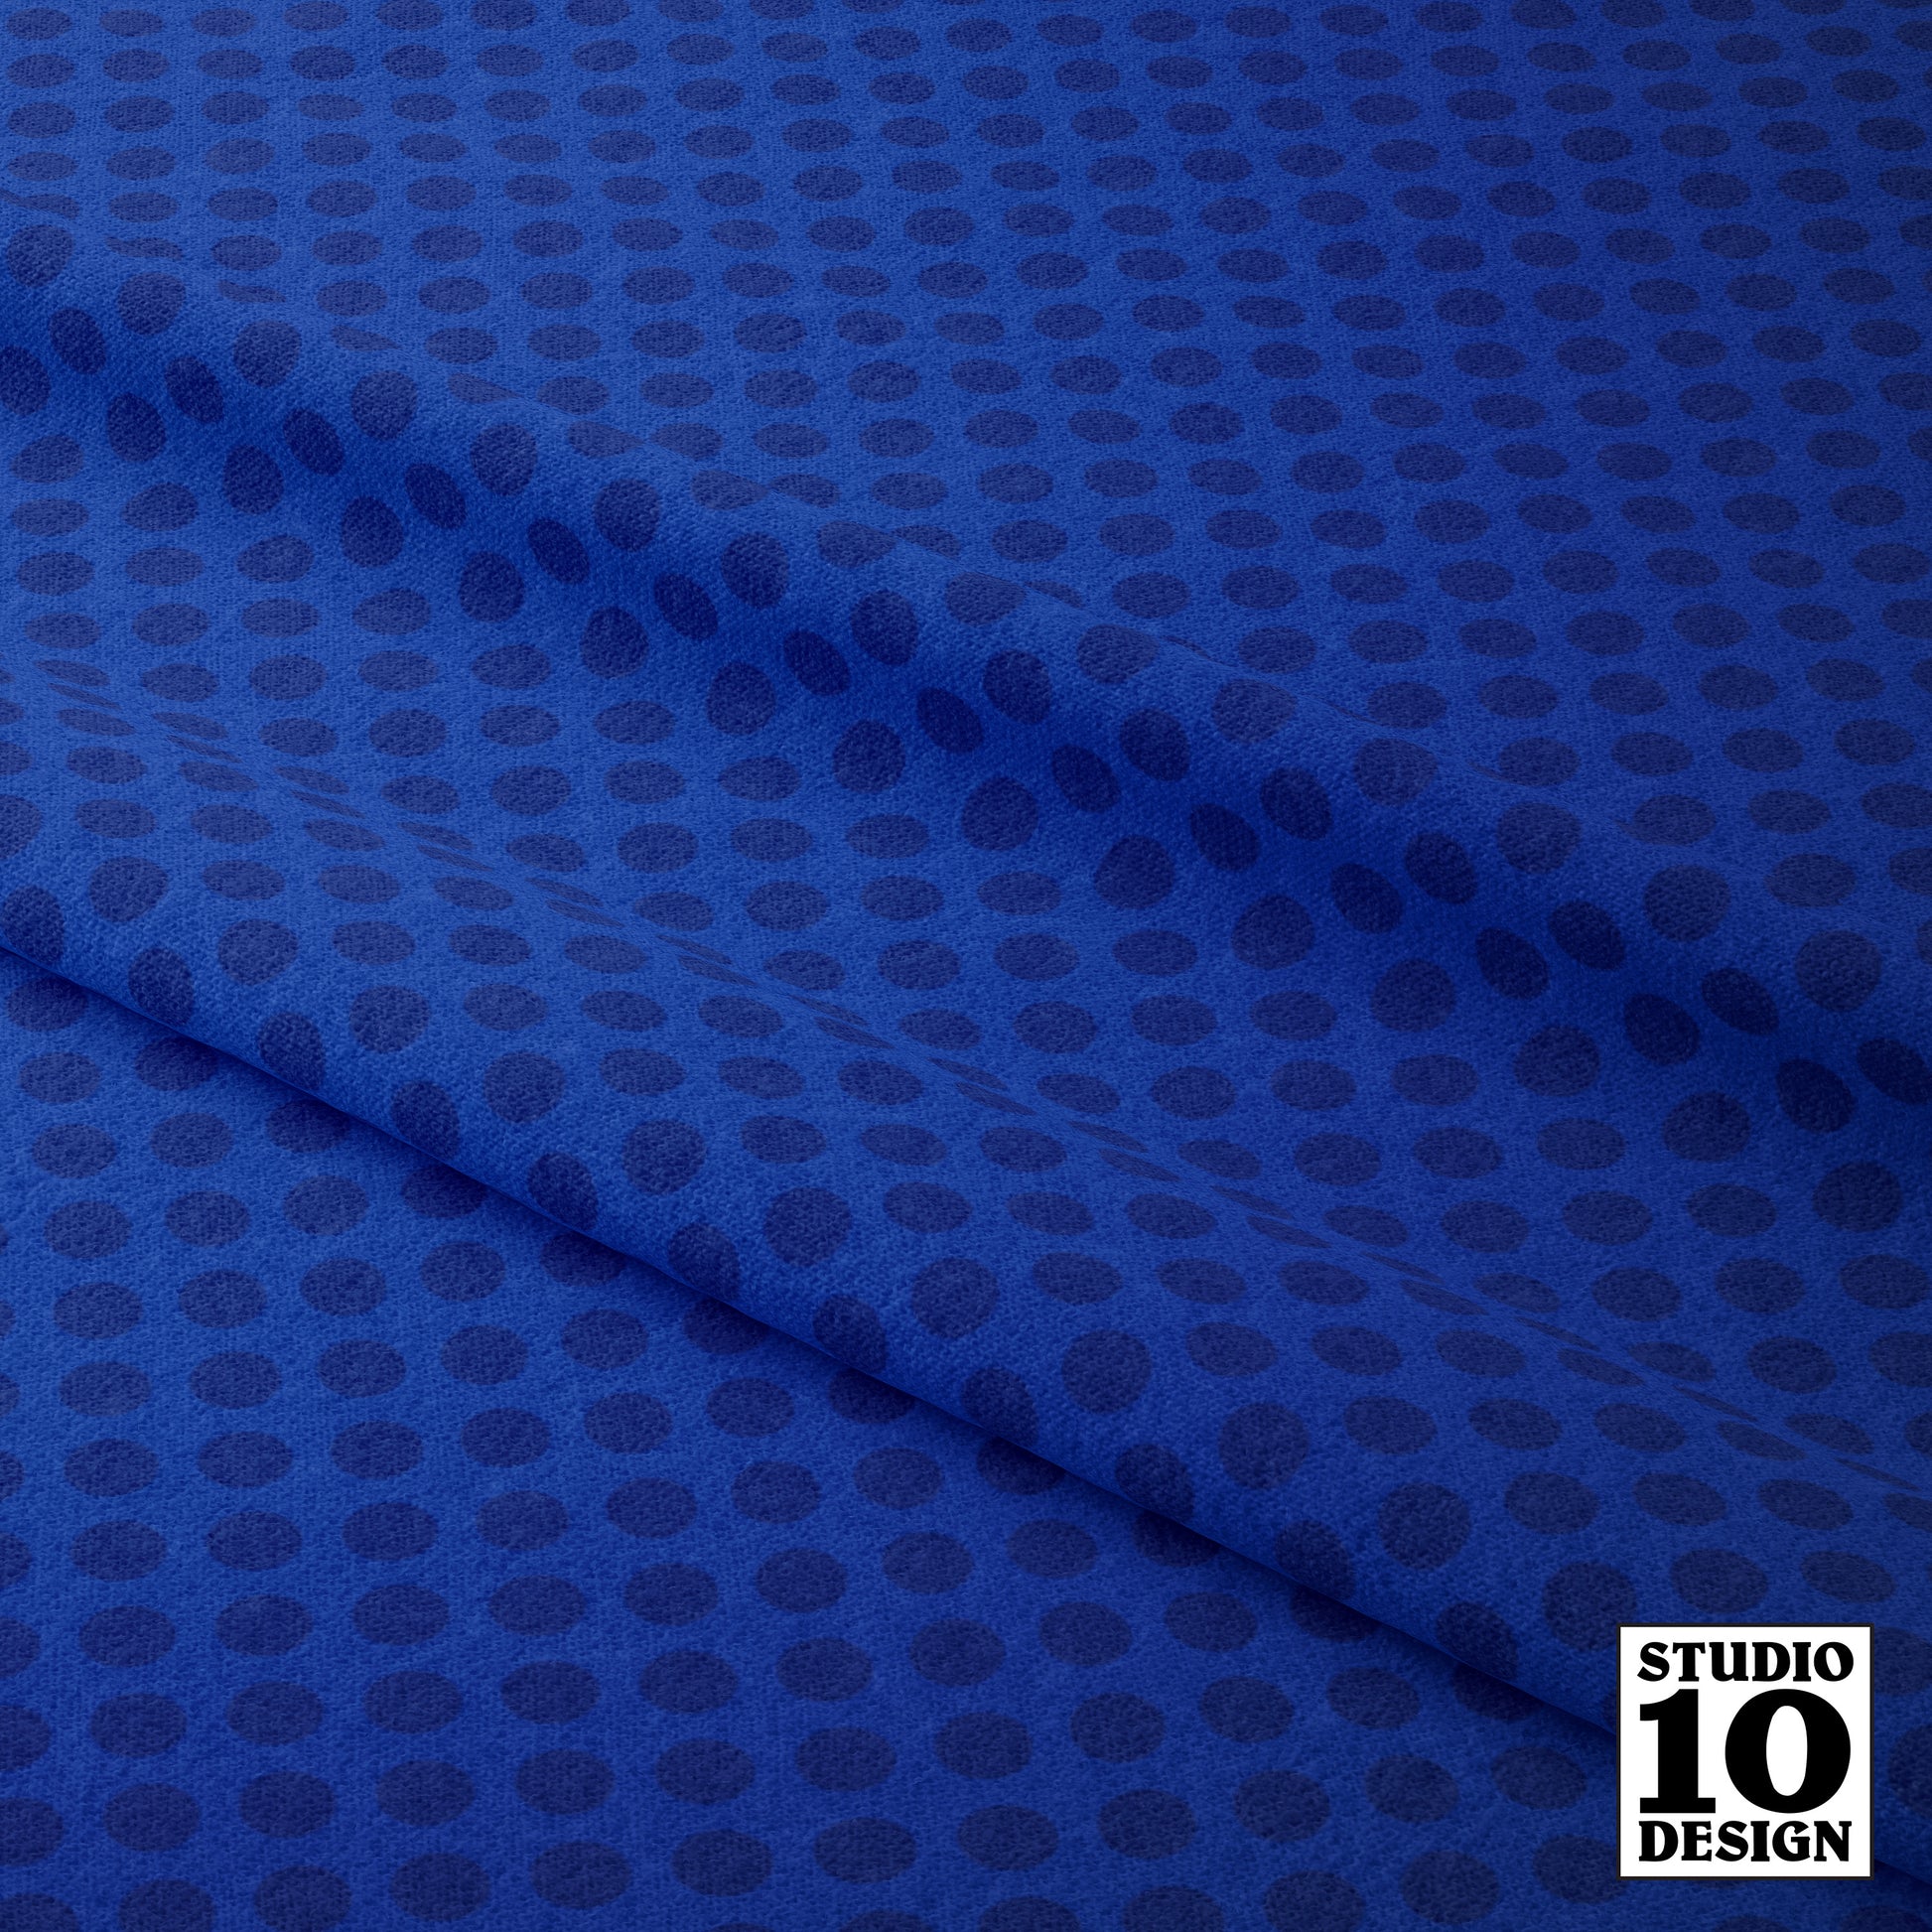 Ben Day Dots, Blue Printed Fabric by Studio Ten Design